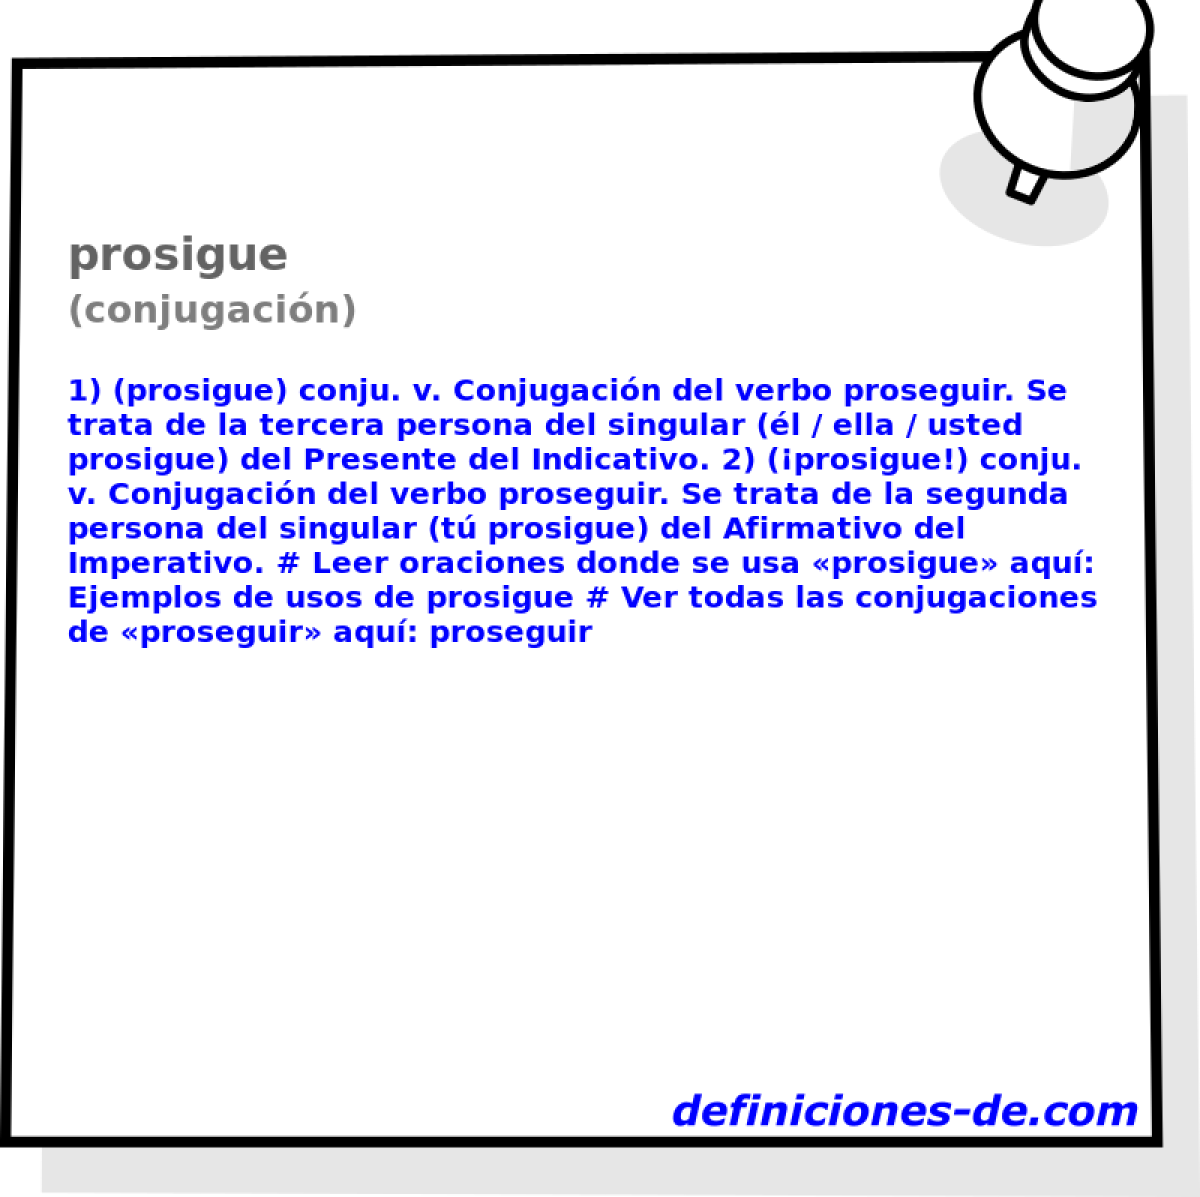 prosigue (conjugacin)